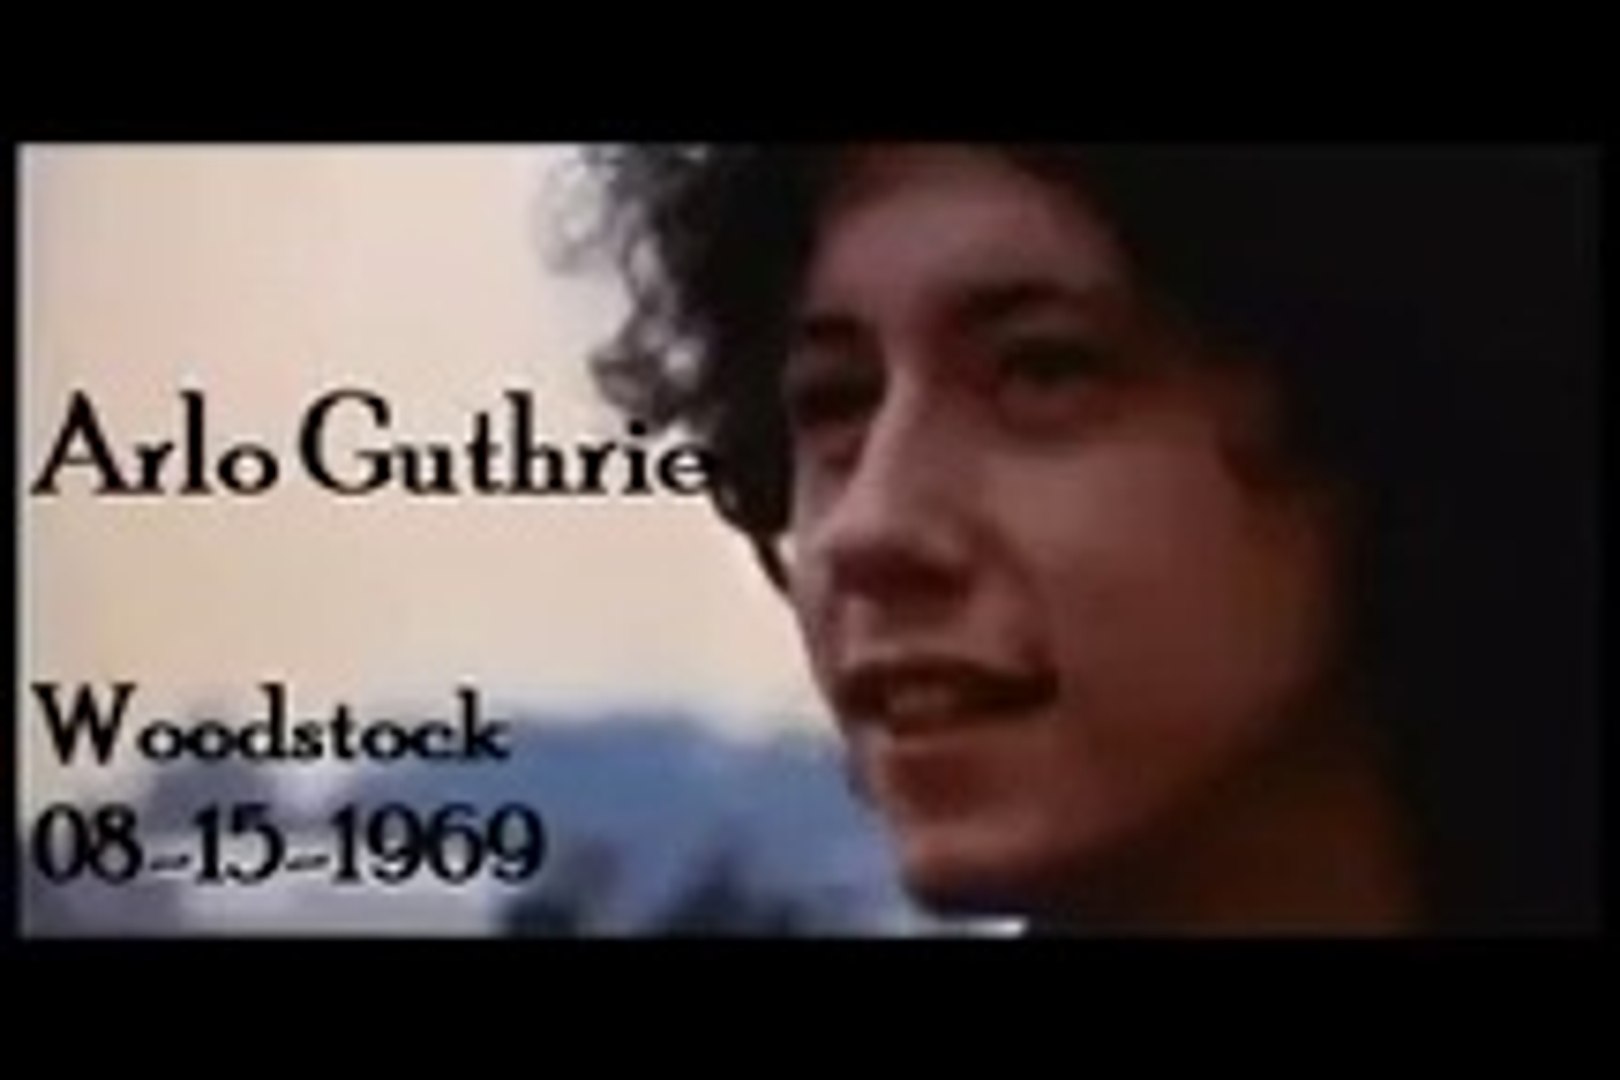 Arlo Guthrie - album Woodstock 08-15-1969 - Video Dailymotion